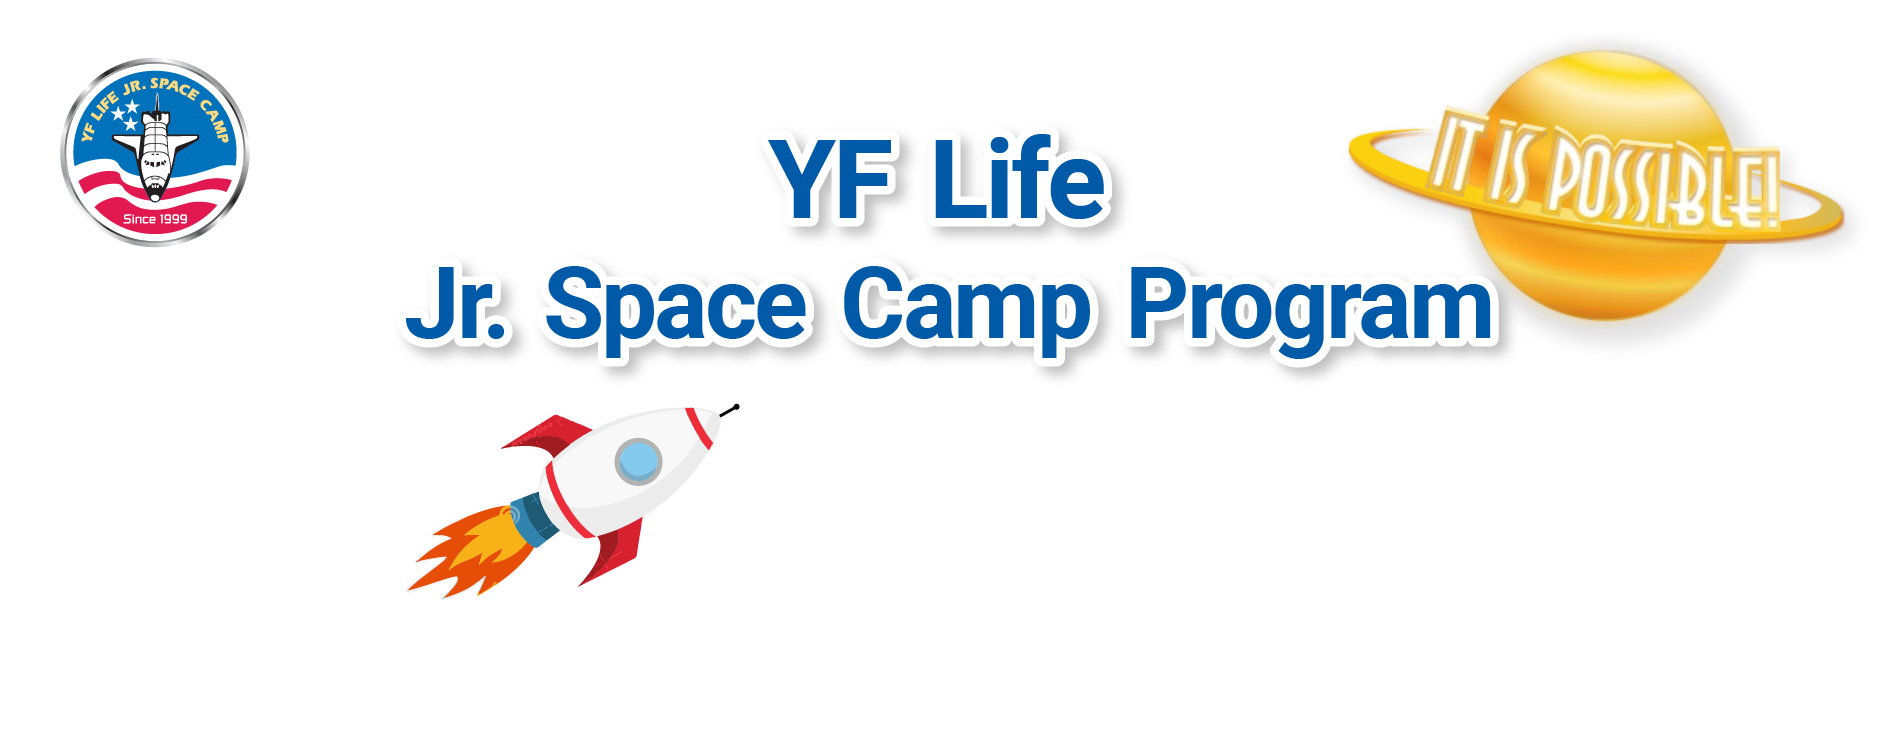 yf-life-jr-space-camp-program-application-form